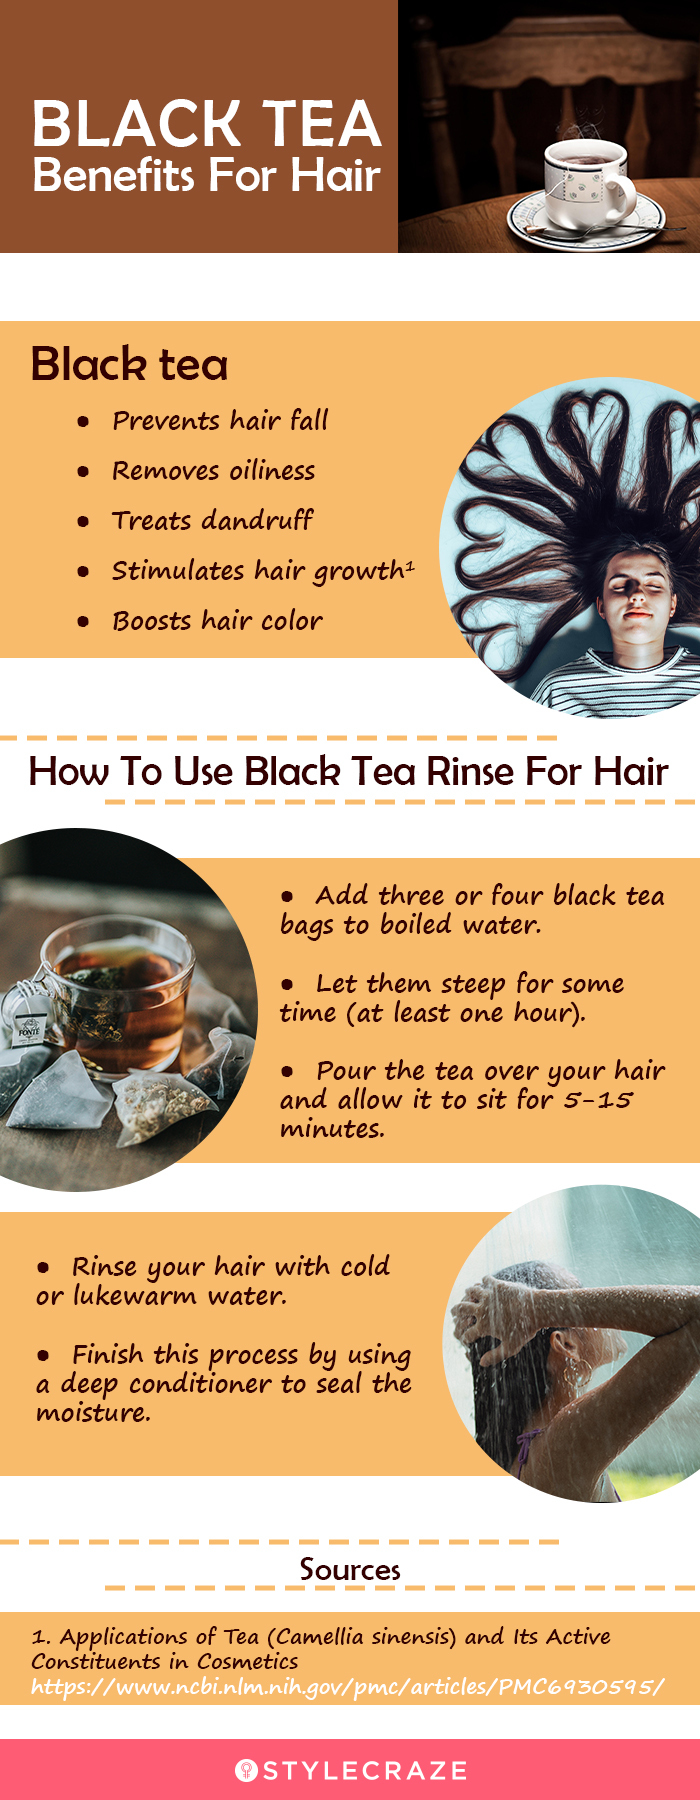 black tea benefits of hair (infographic)